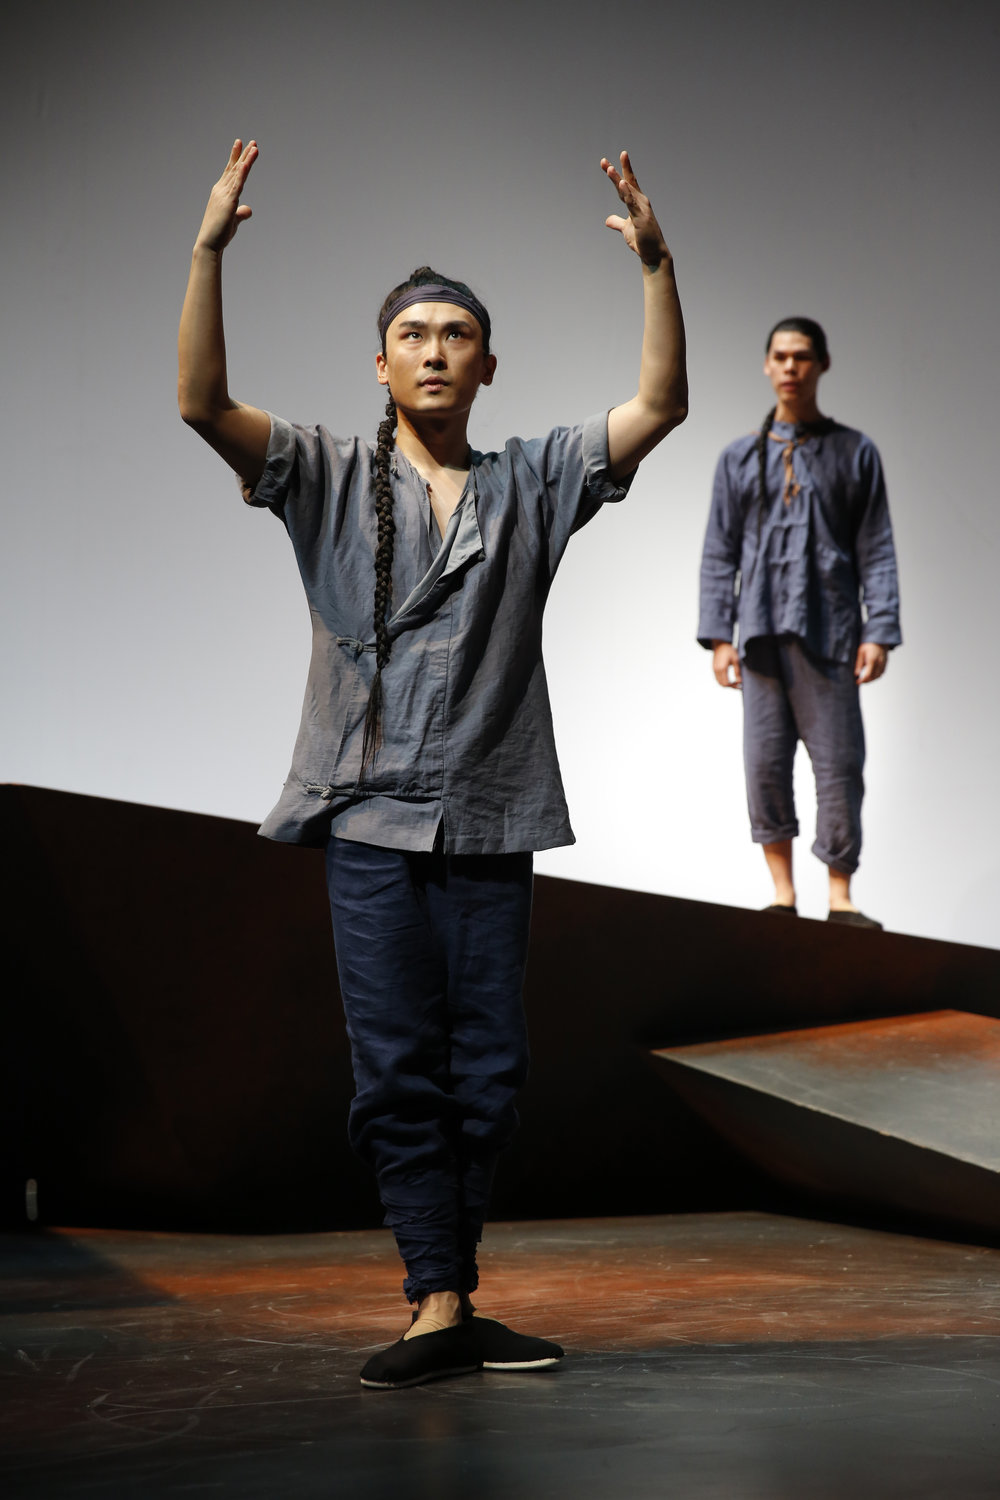 William Yuekun Wu 和 Ruy Iskandar 在演出中。 Joan Marcus摄于署名剧院，2013年。